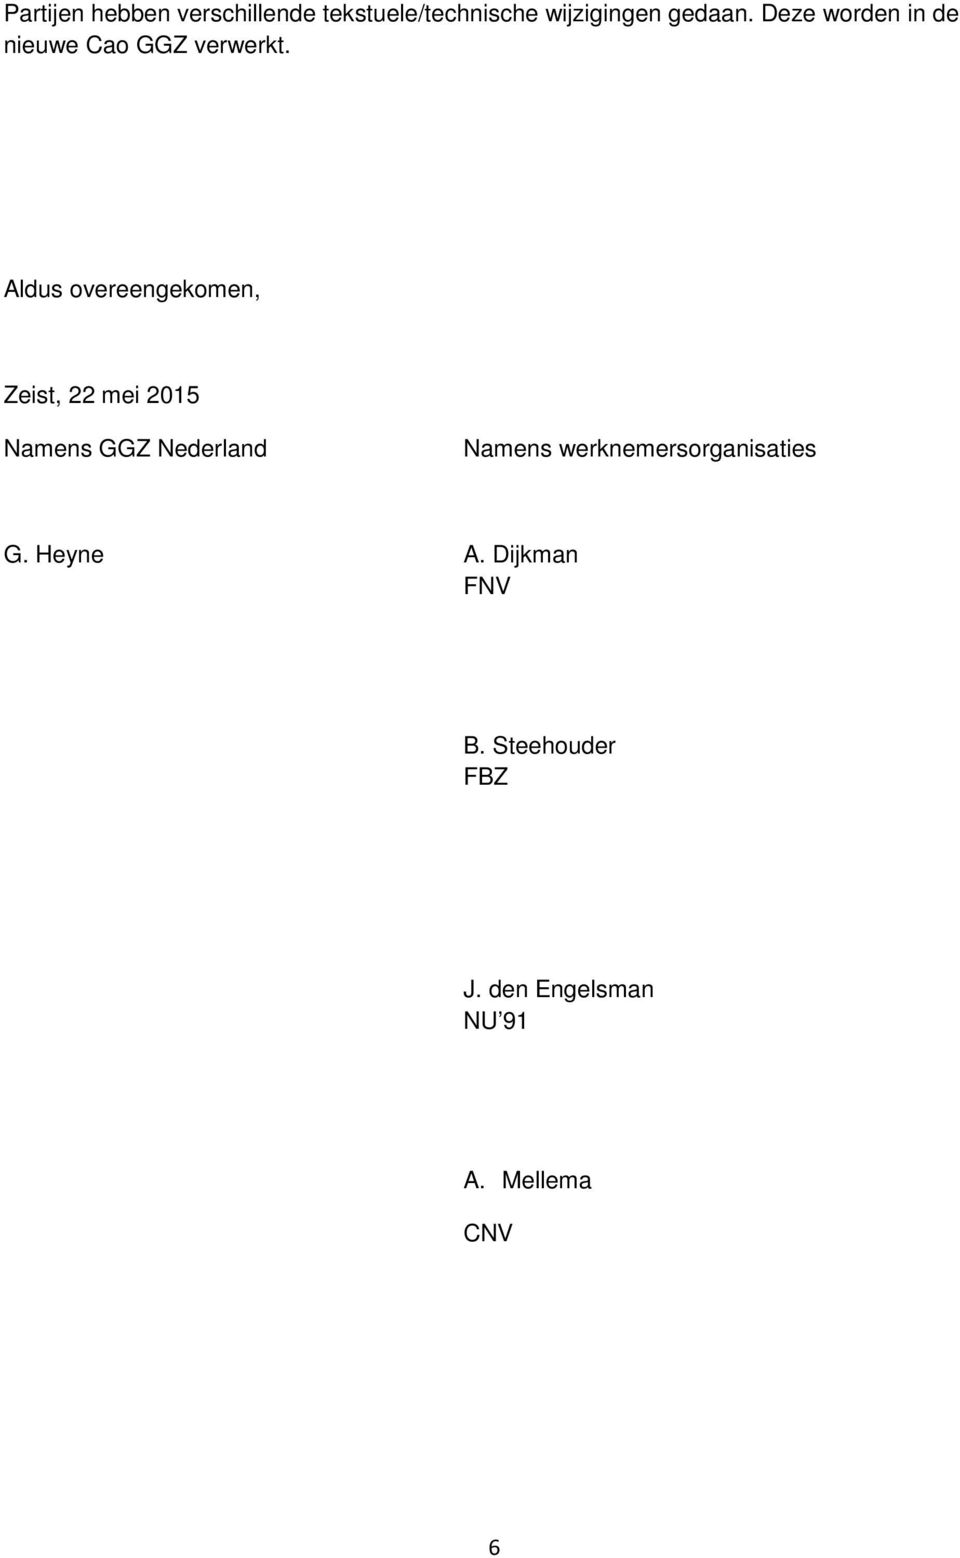 Aldus overeengekomen, Zeist, 22 mei 2015 Namens GGZ Nederland Namens